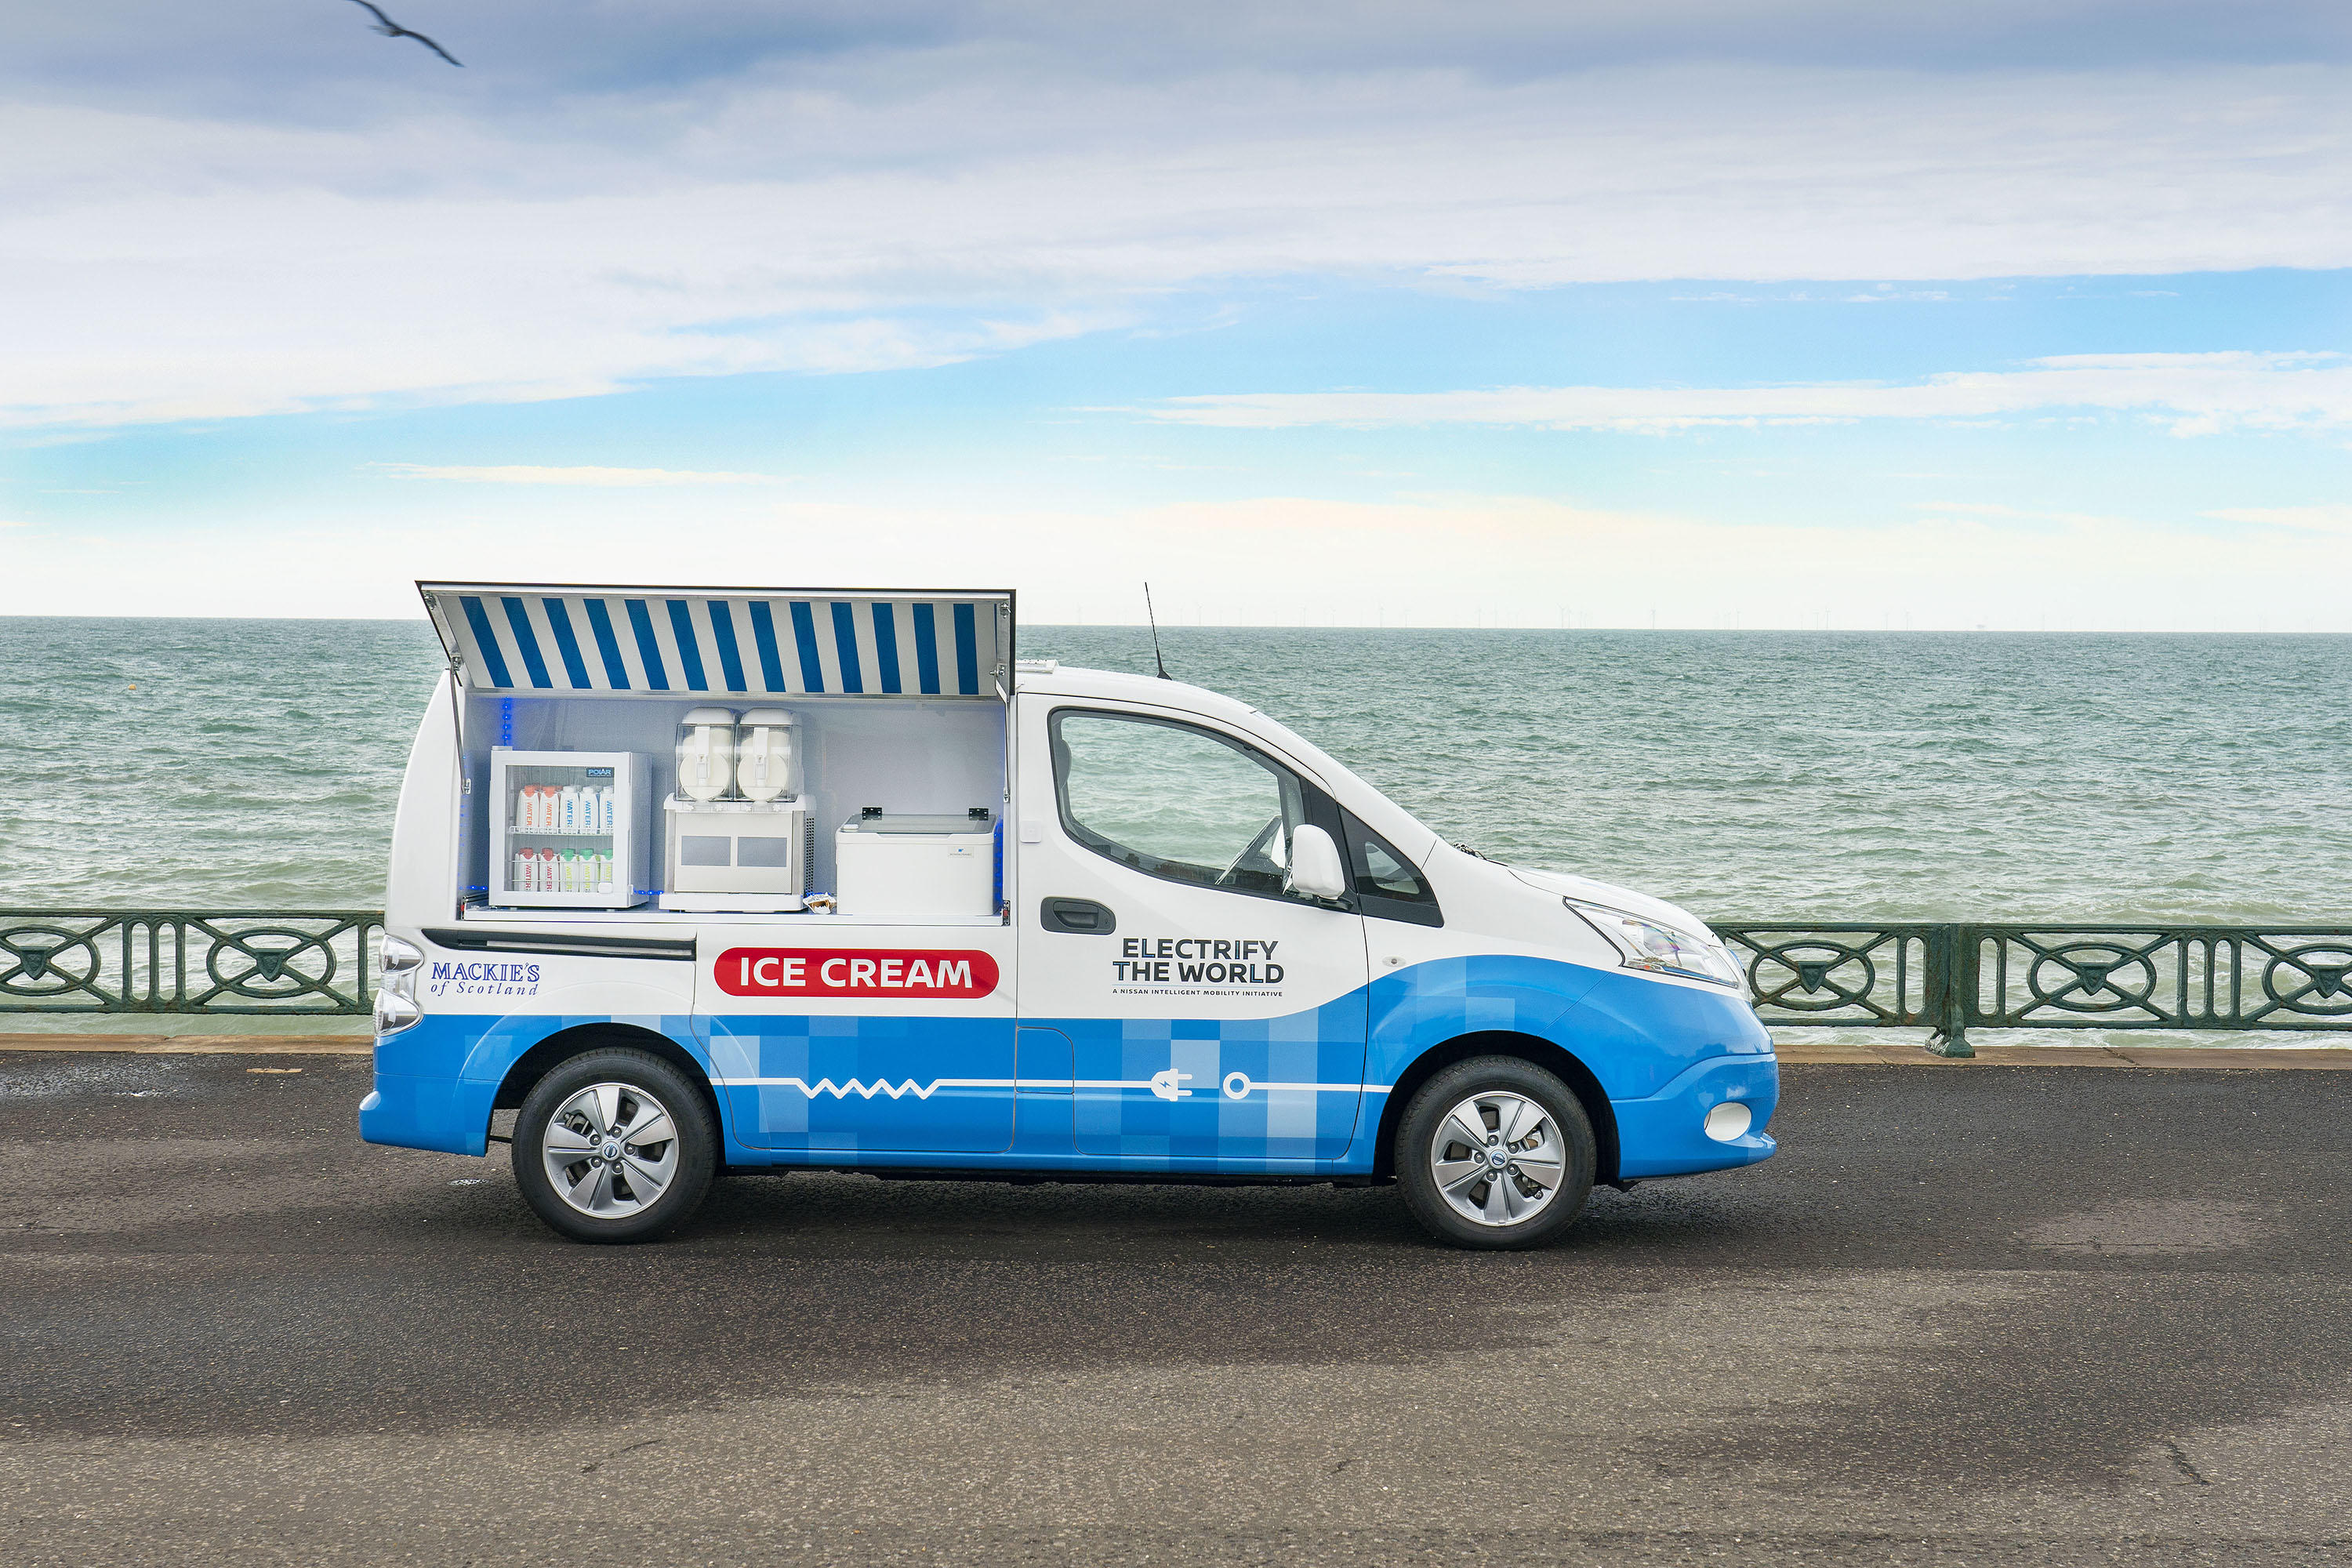 Nissan built an ice cream truck that's 